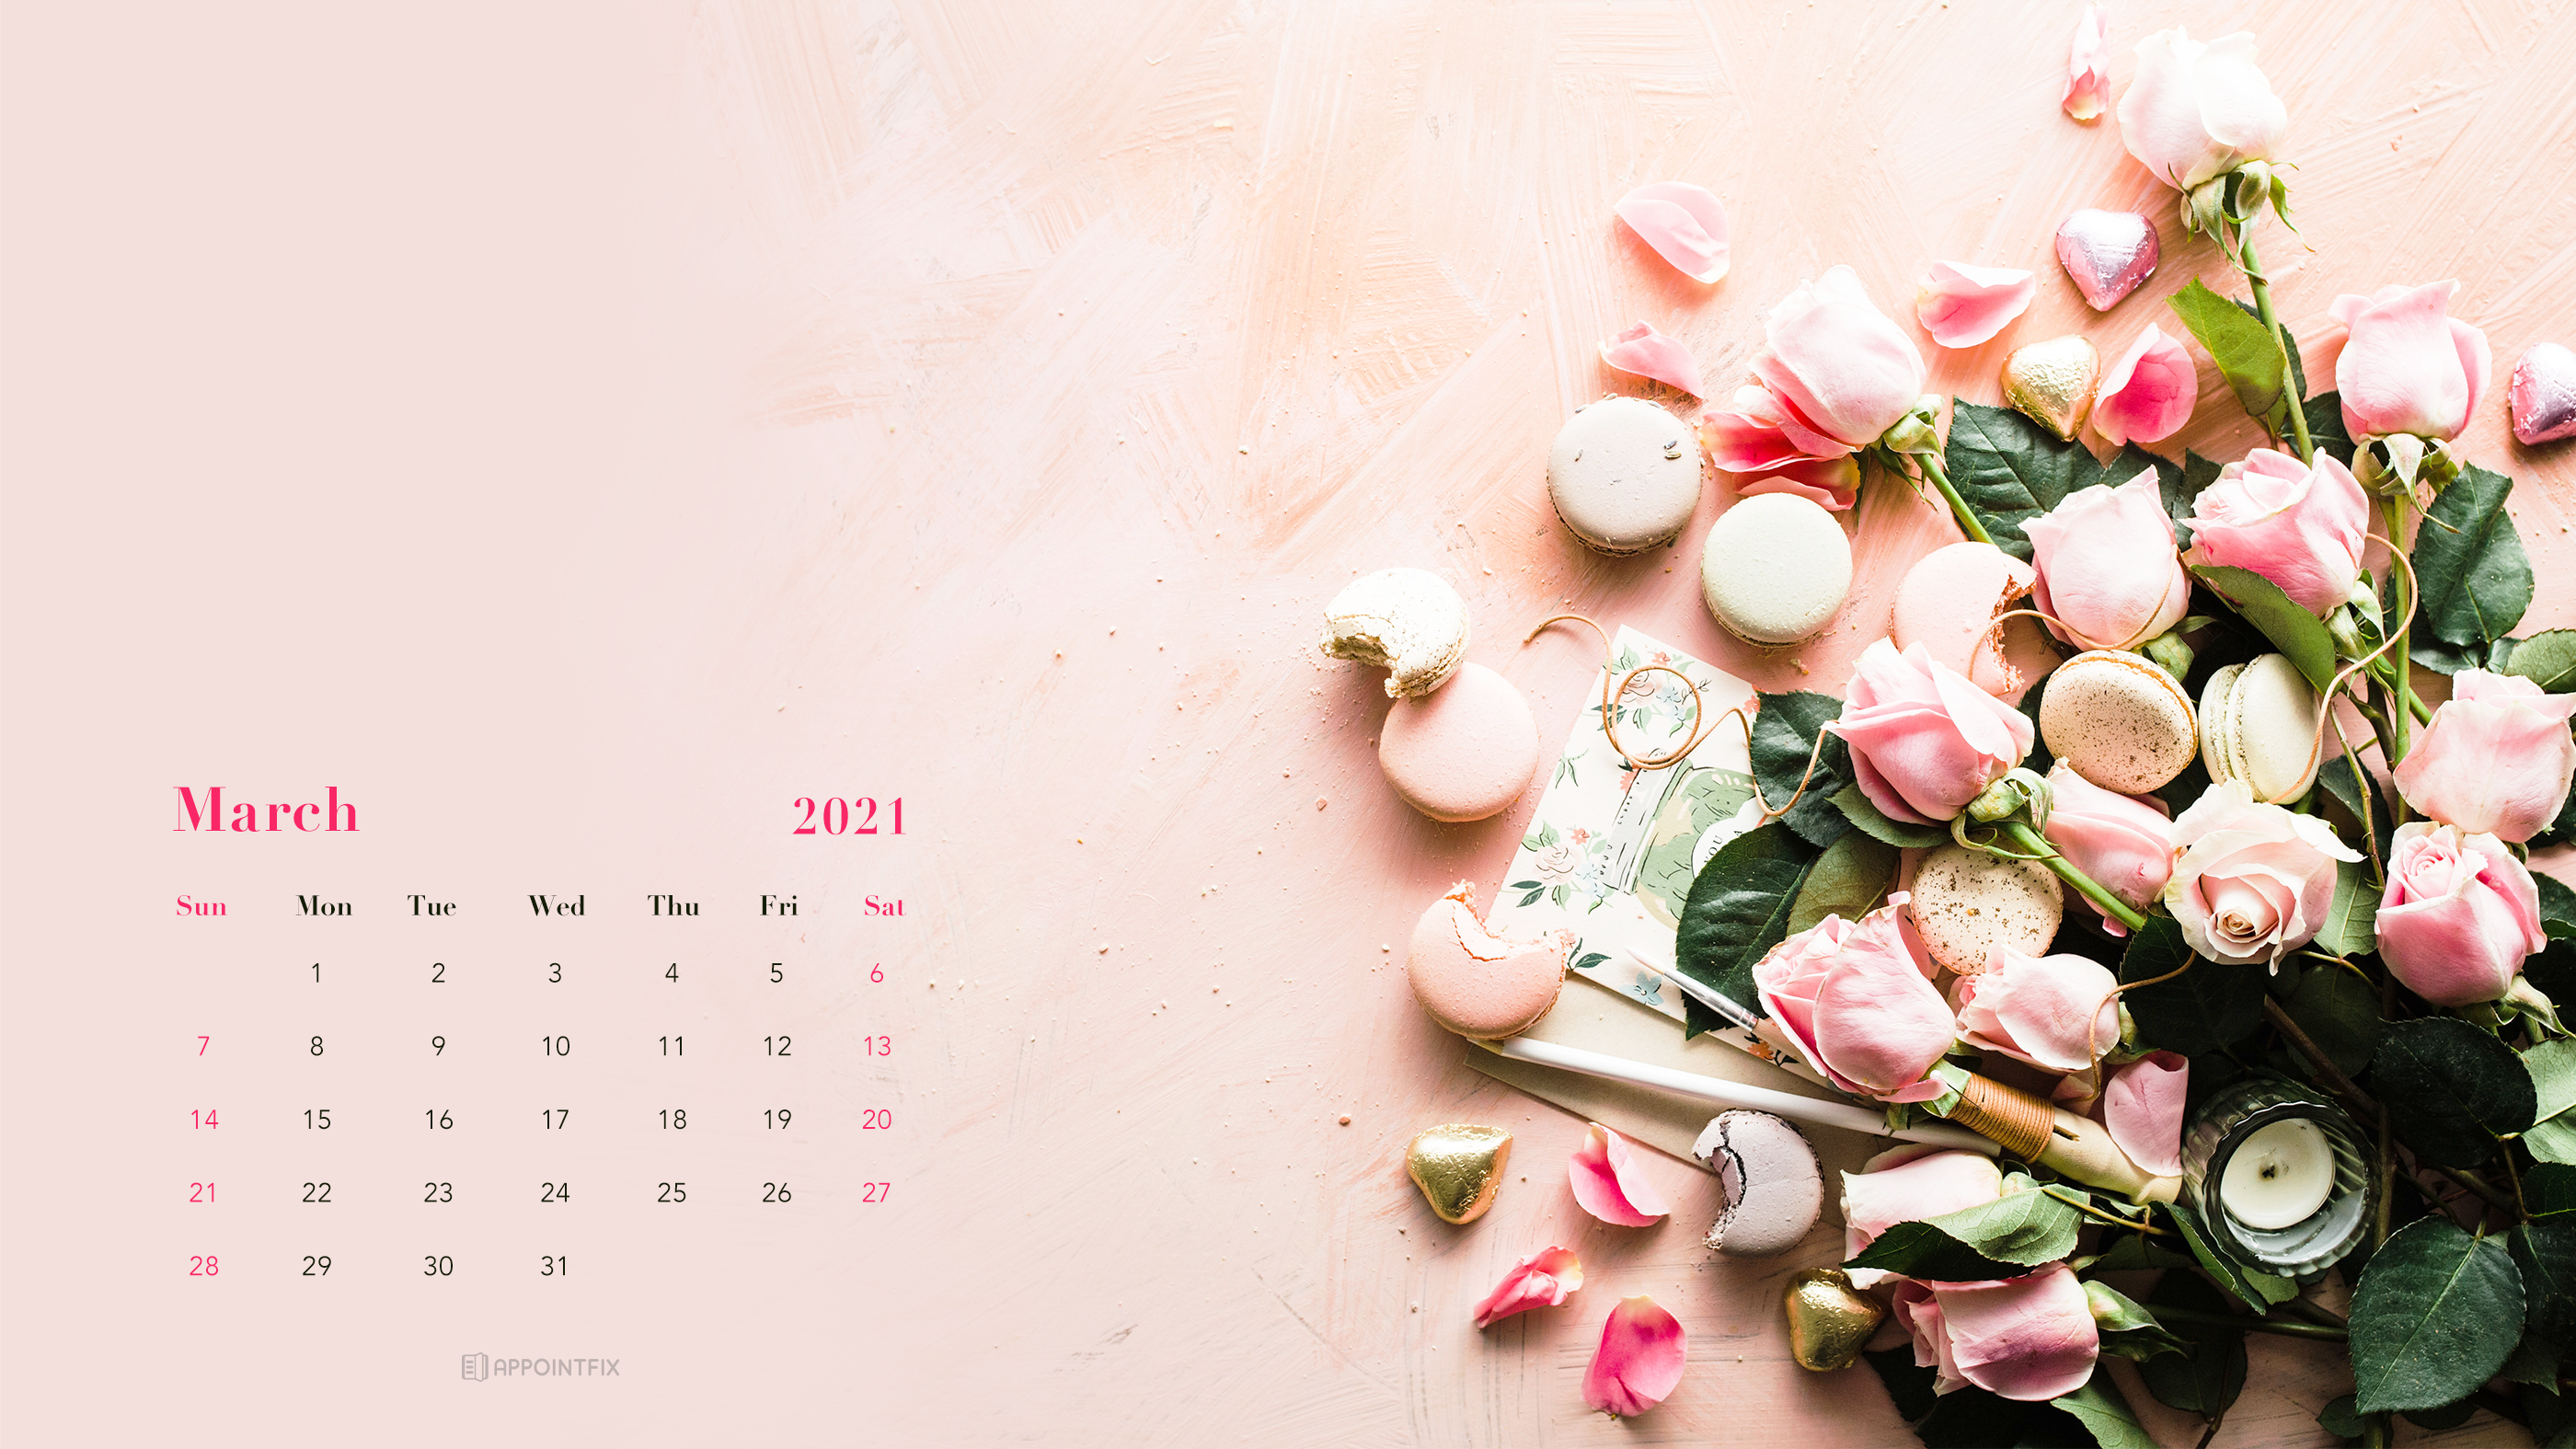 March 2021 Desktop Wallpaper Calendar Image ID 13